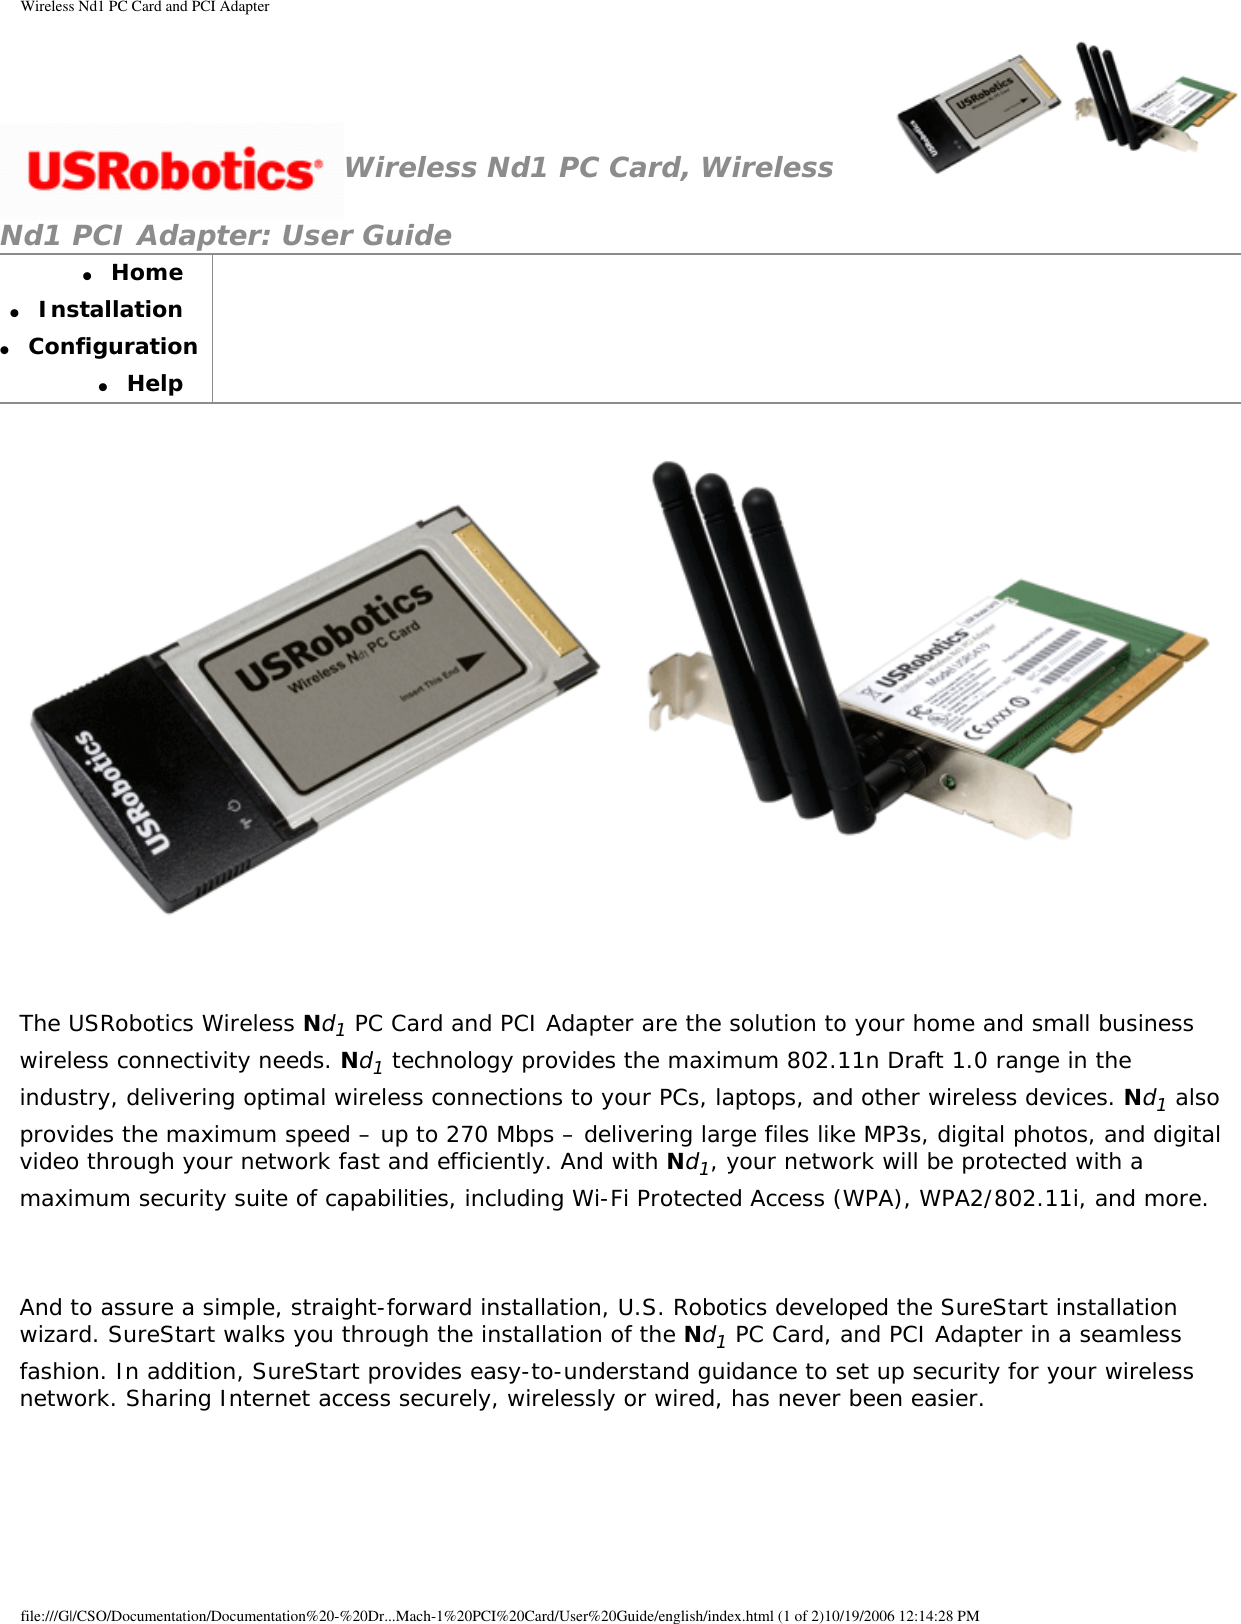 Page 1 of GemTek Technology P950622G USRobotics Wireless Nd1 PCI Adapter User Manual Wireless Nd1 PC Card and PCI Adapter